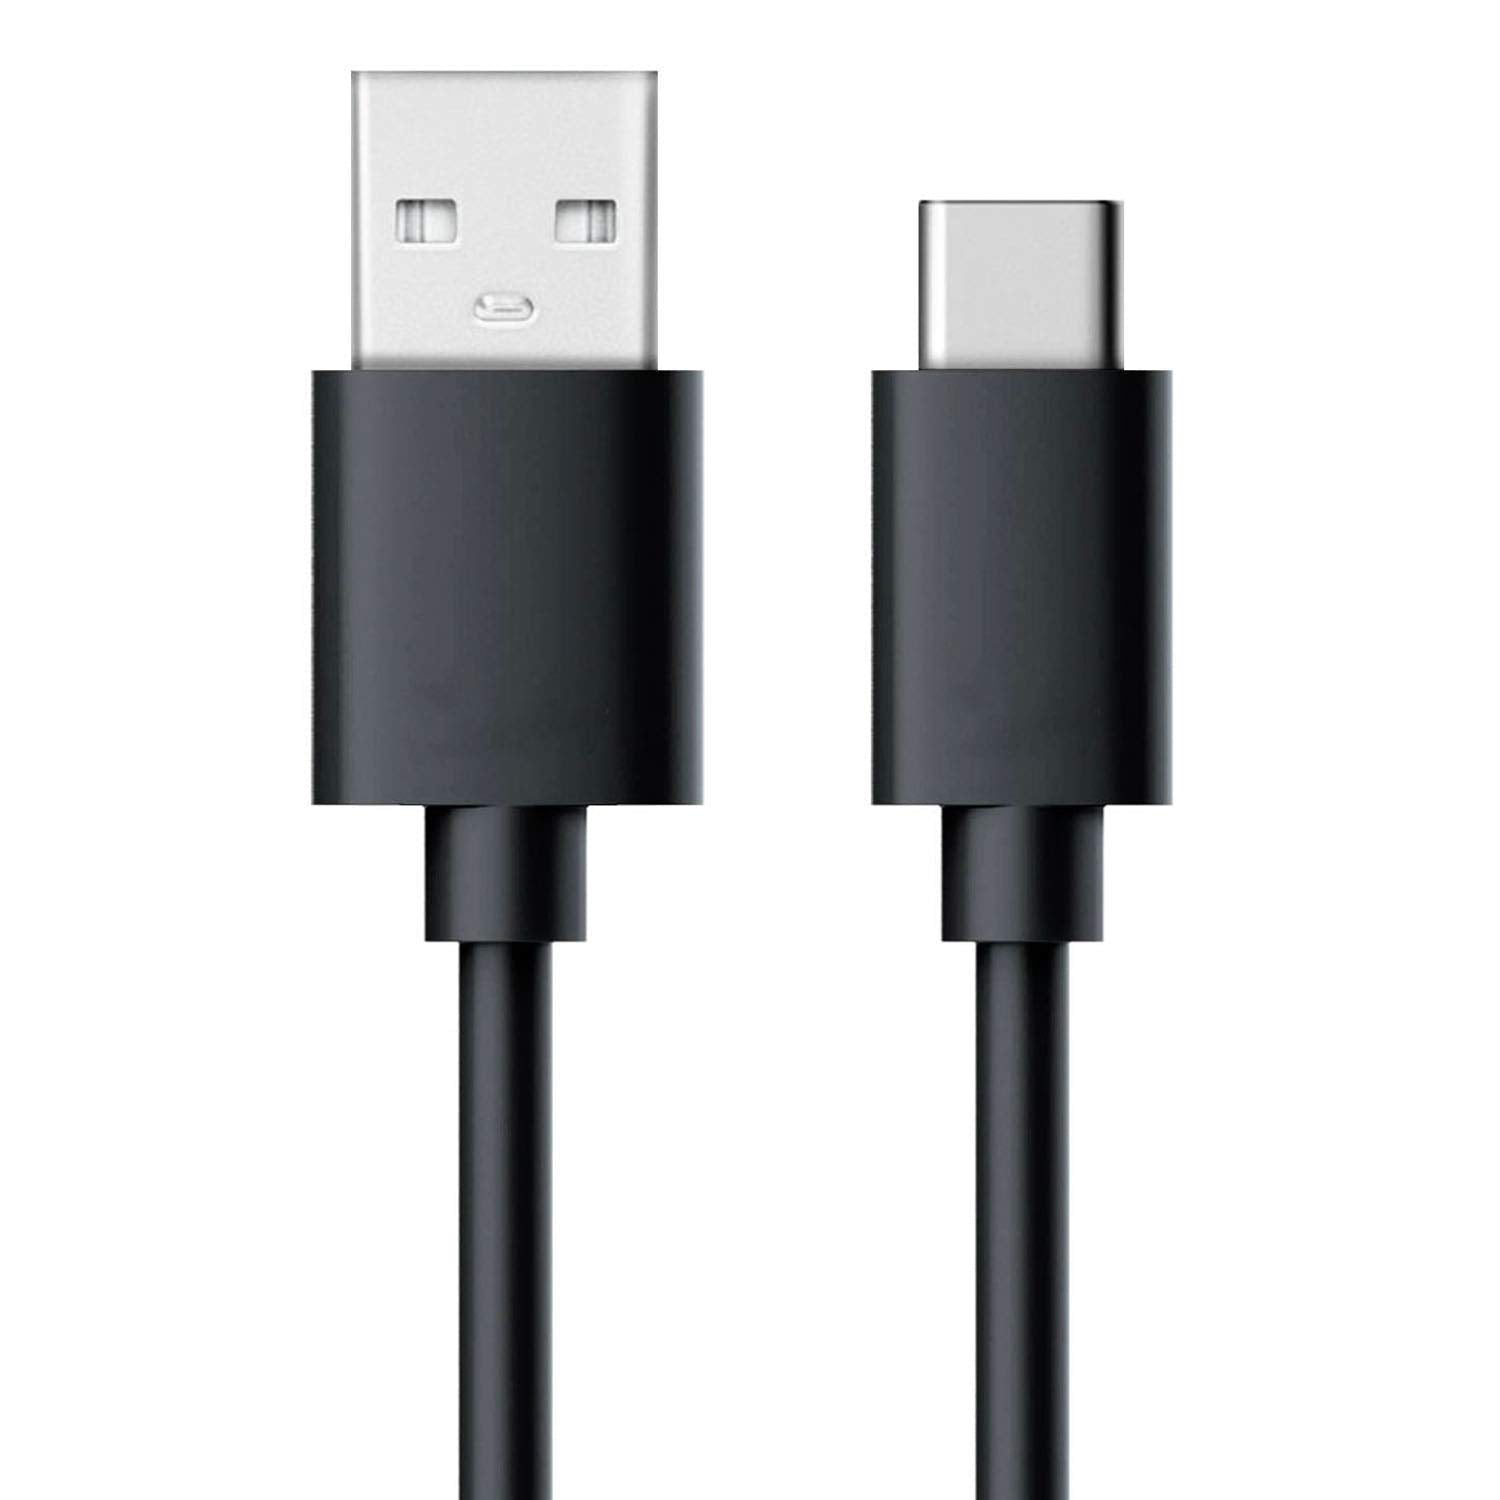 Mi Redmi Note 9 Pro Fast Charging Type-C Data Cable Black -1 Meter